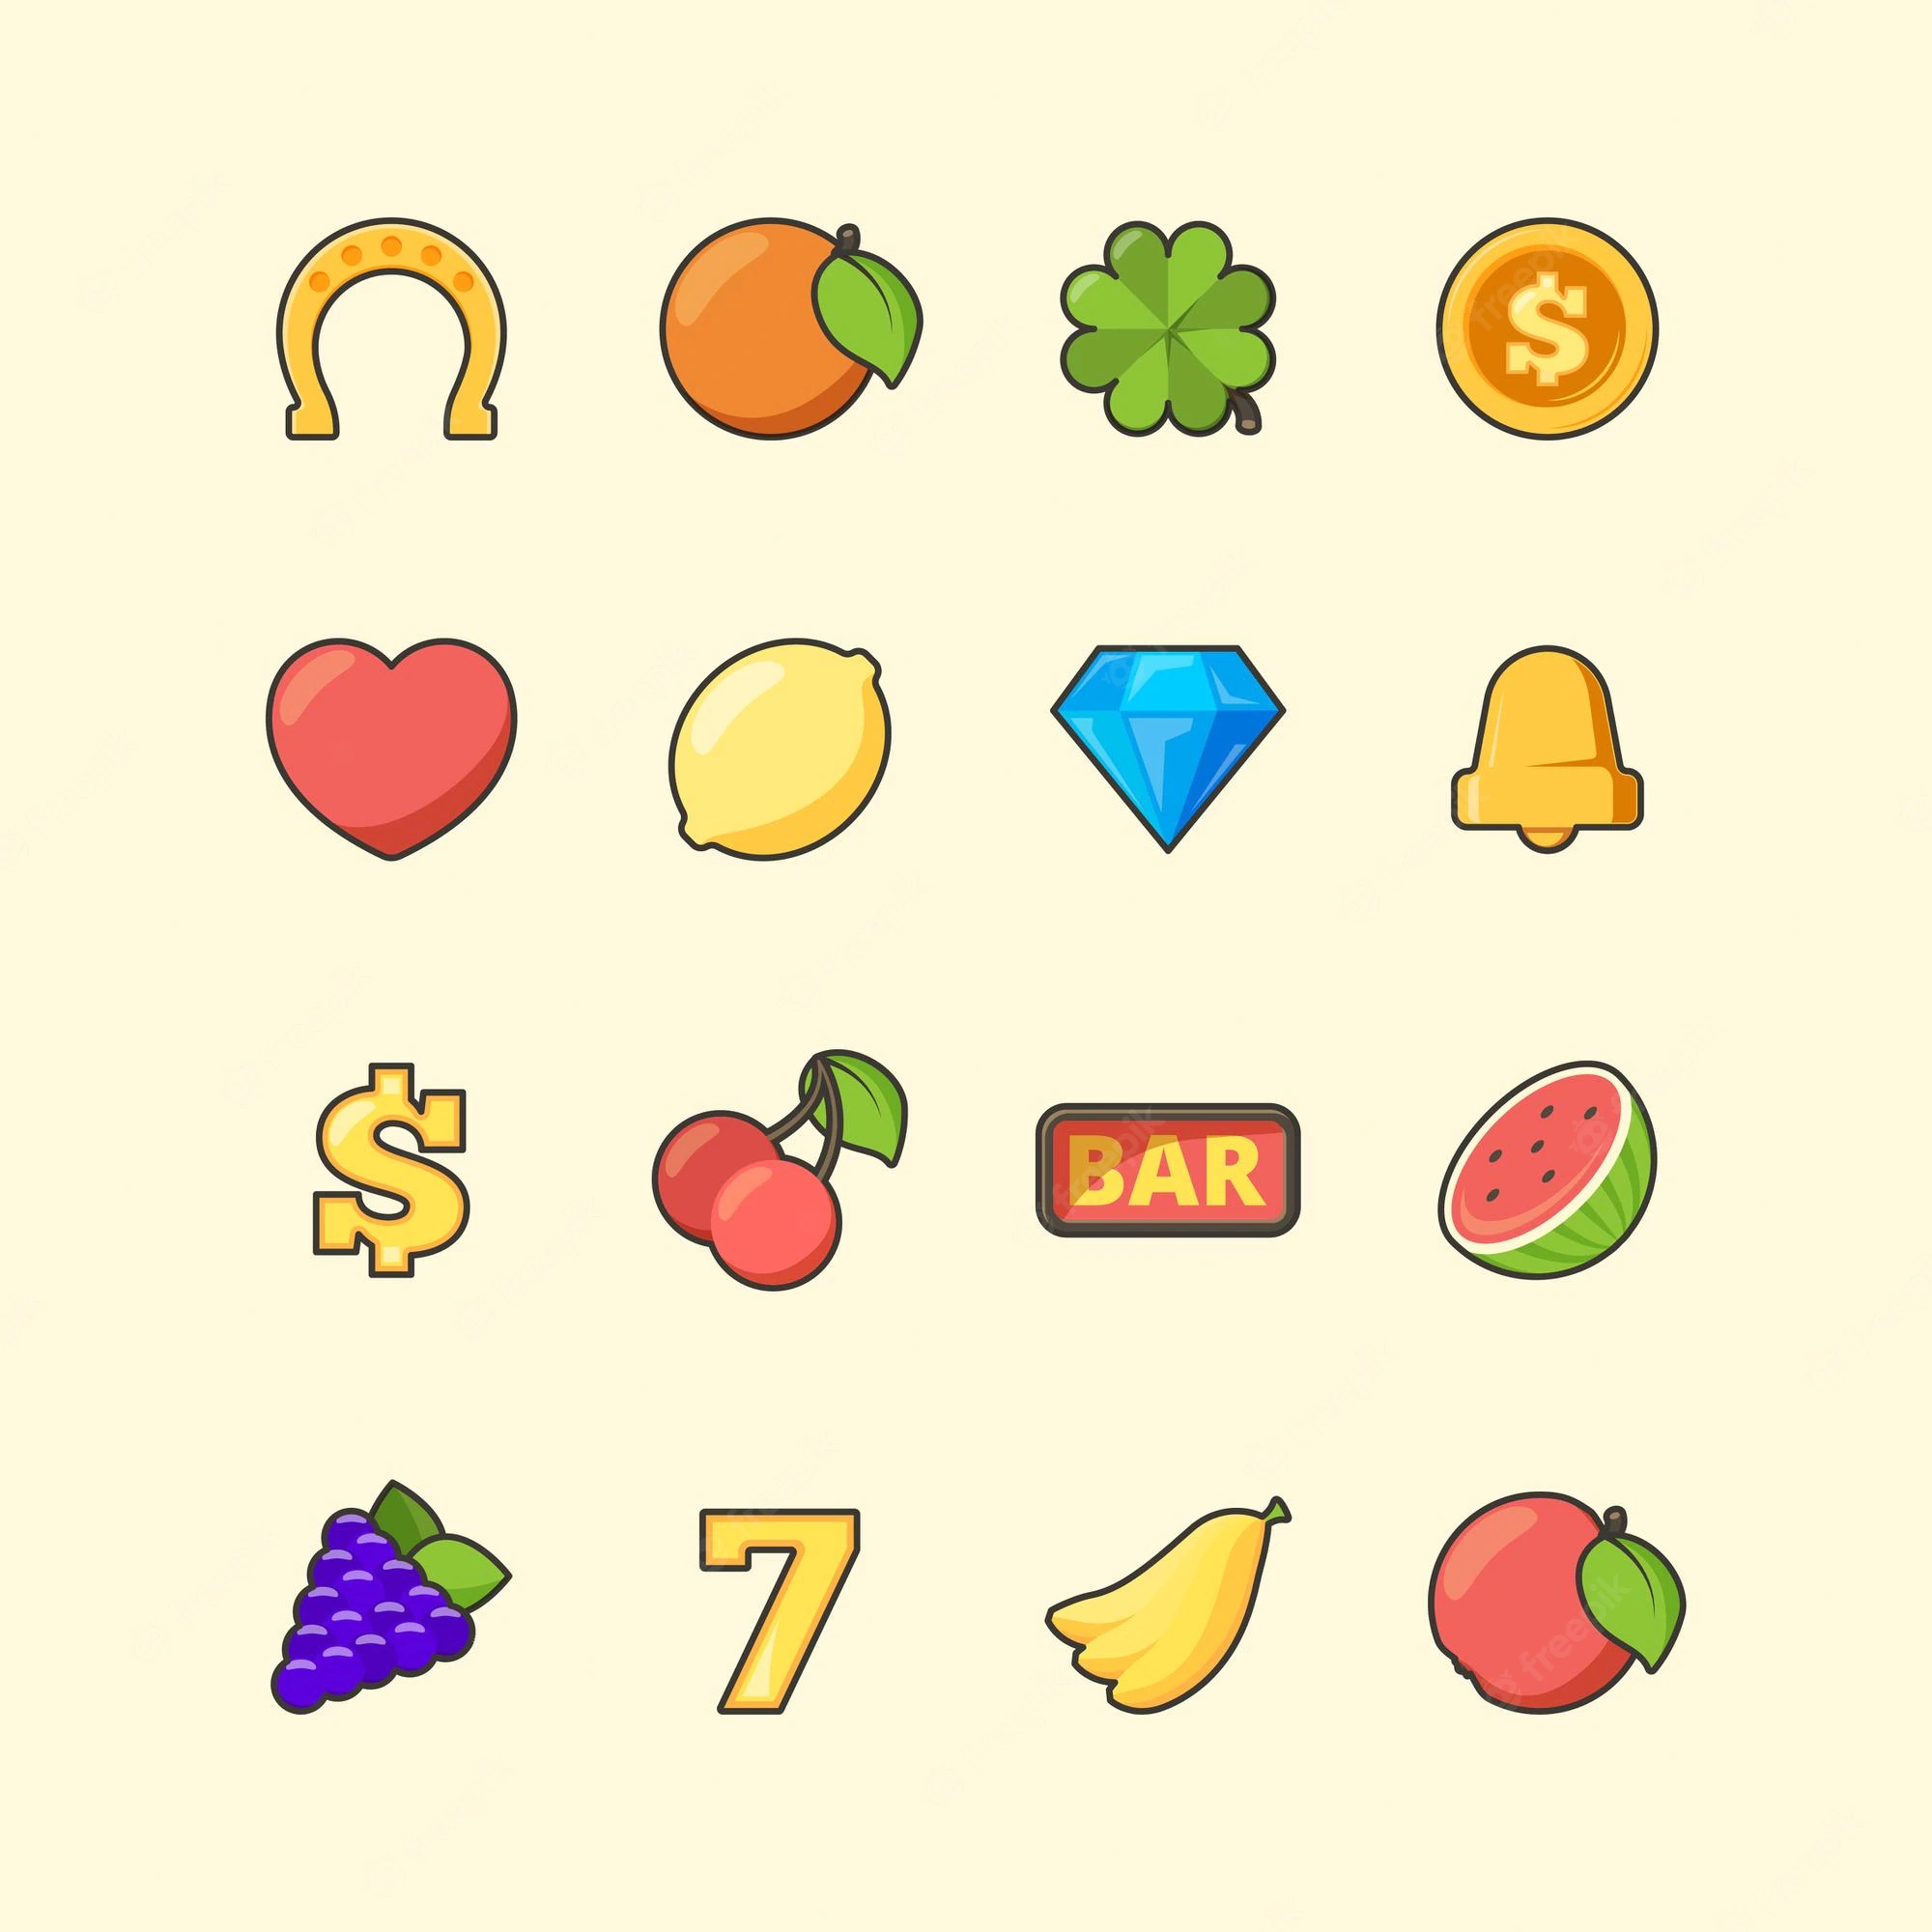 Slot Machine Symbols - Explaining Some Different Types Of Symbols